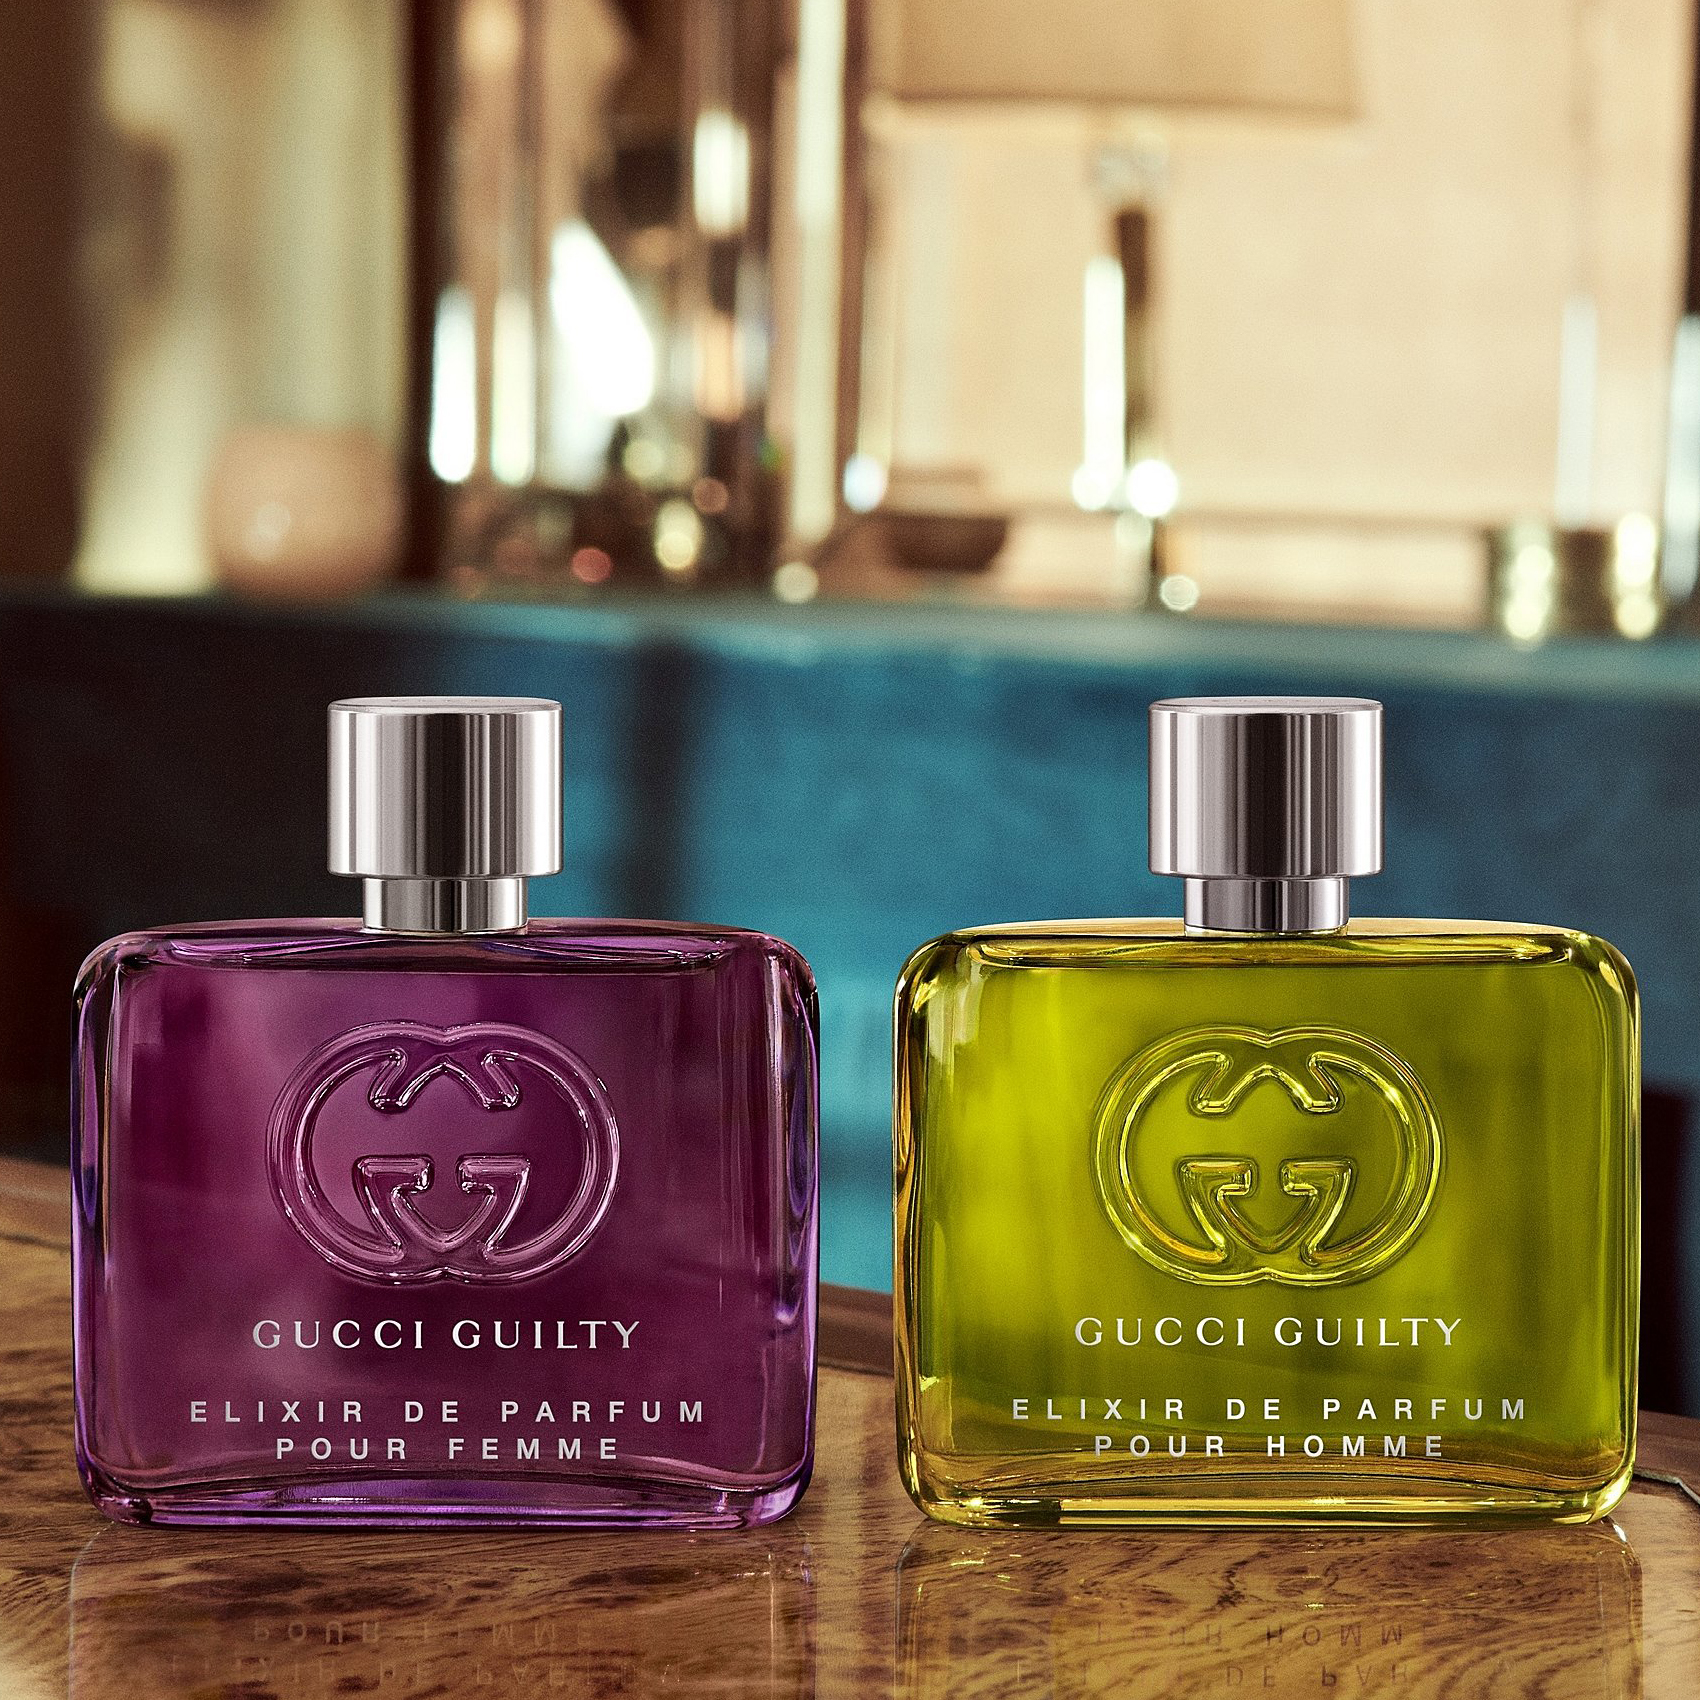 Burberry Her Elixir de Parfum Burberry perfume - a new fragrance